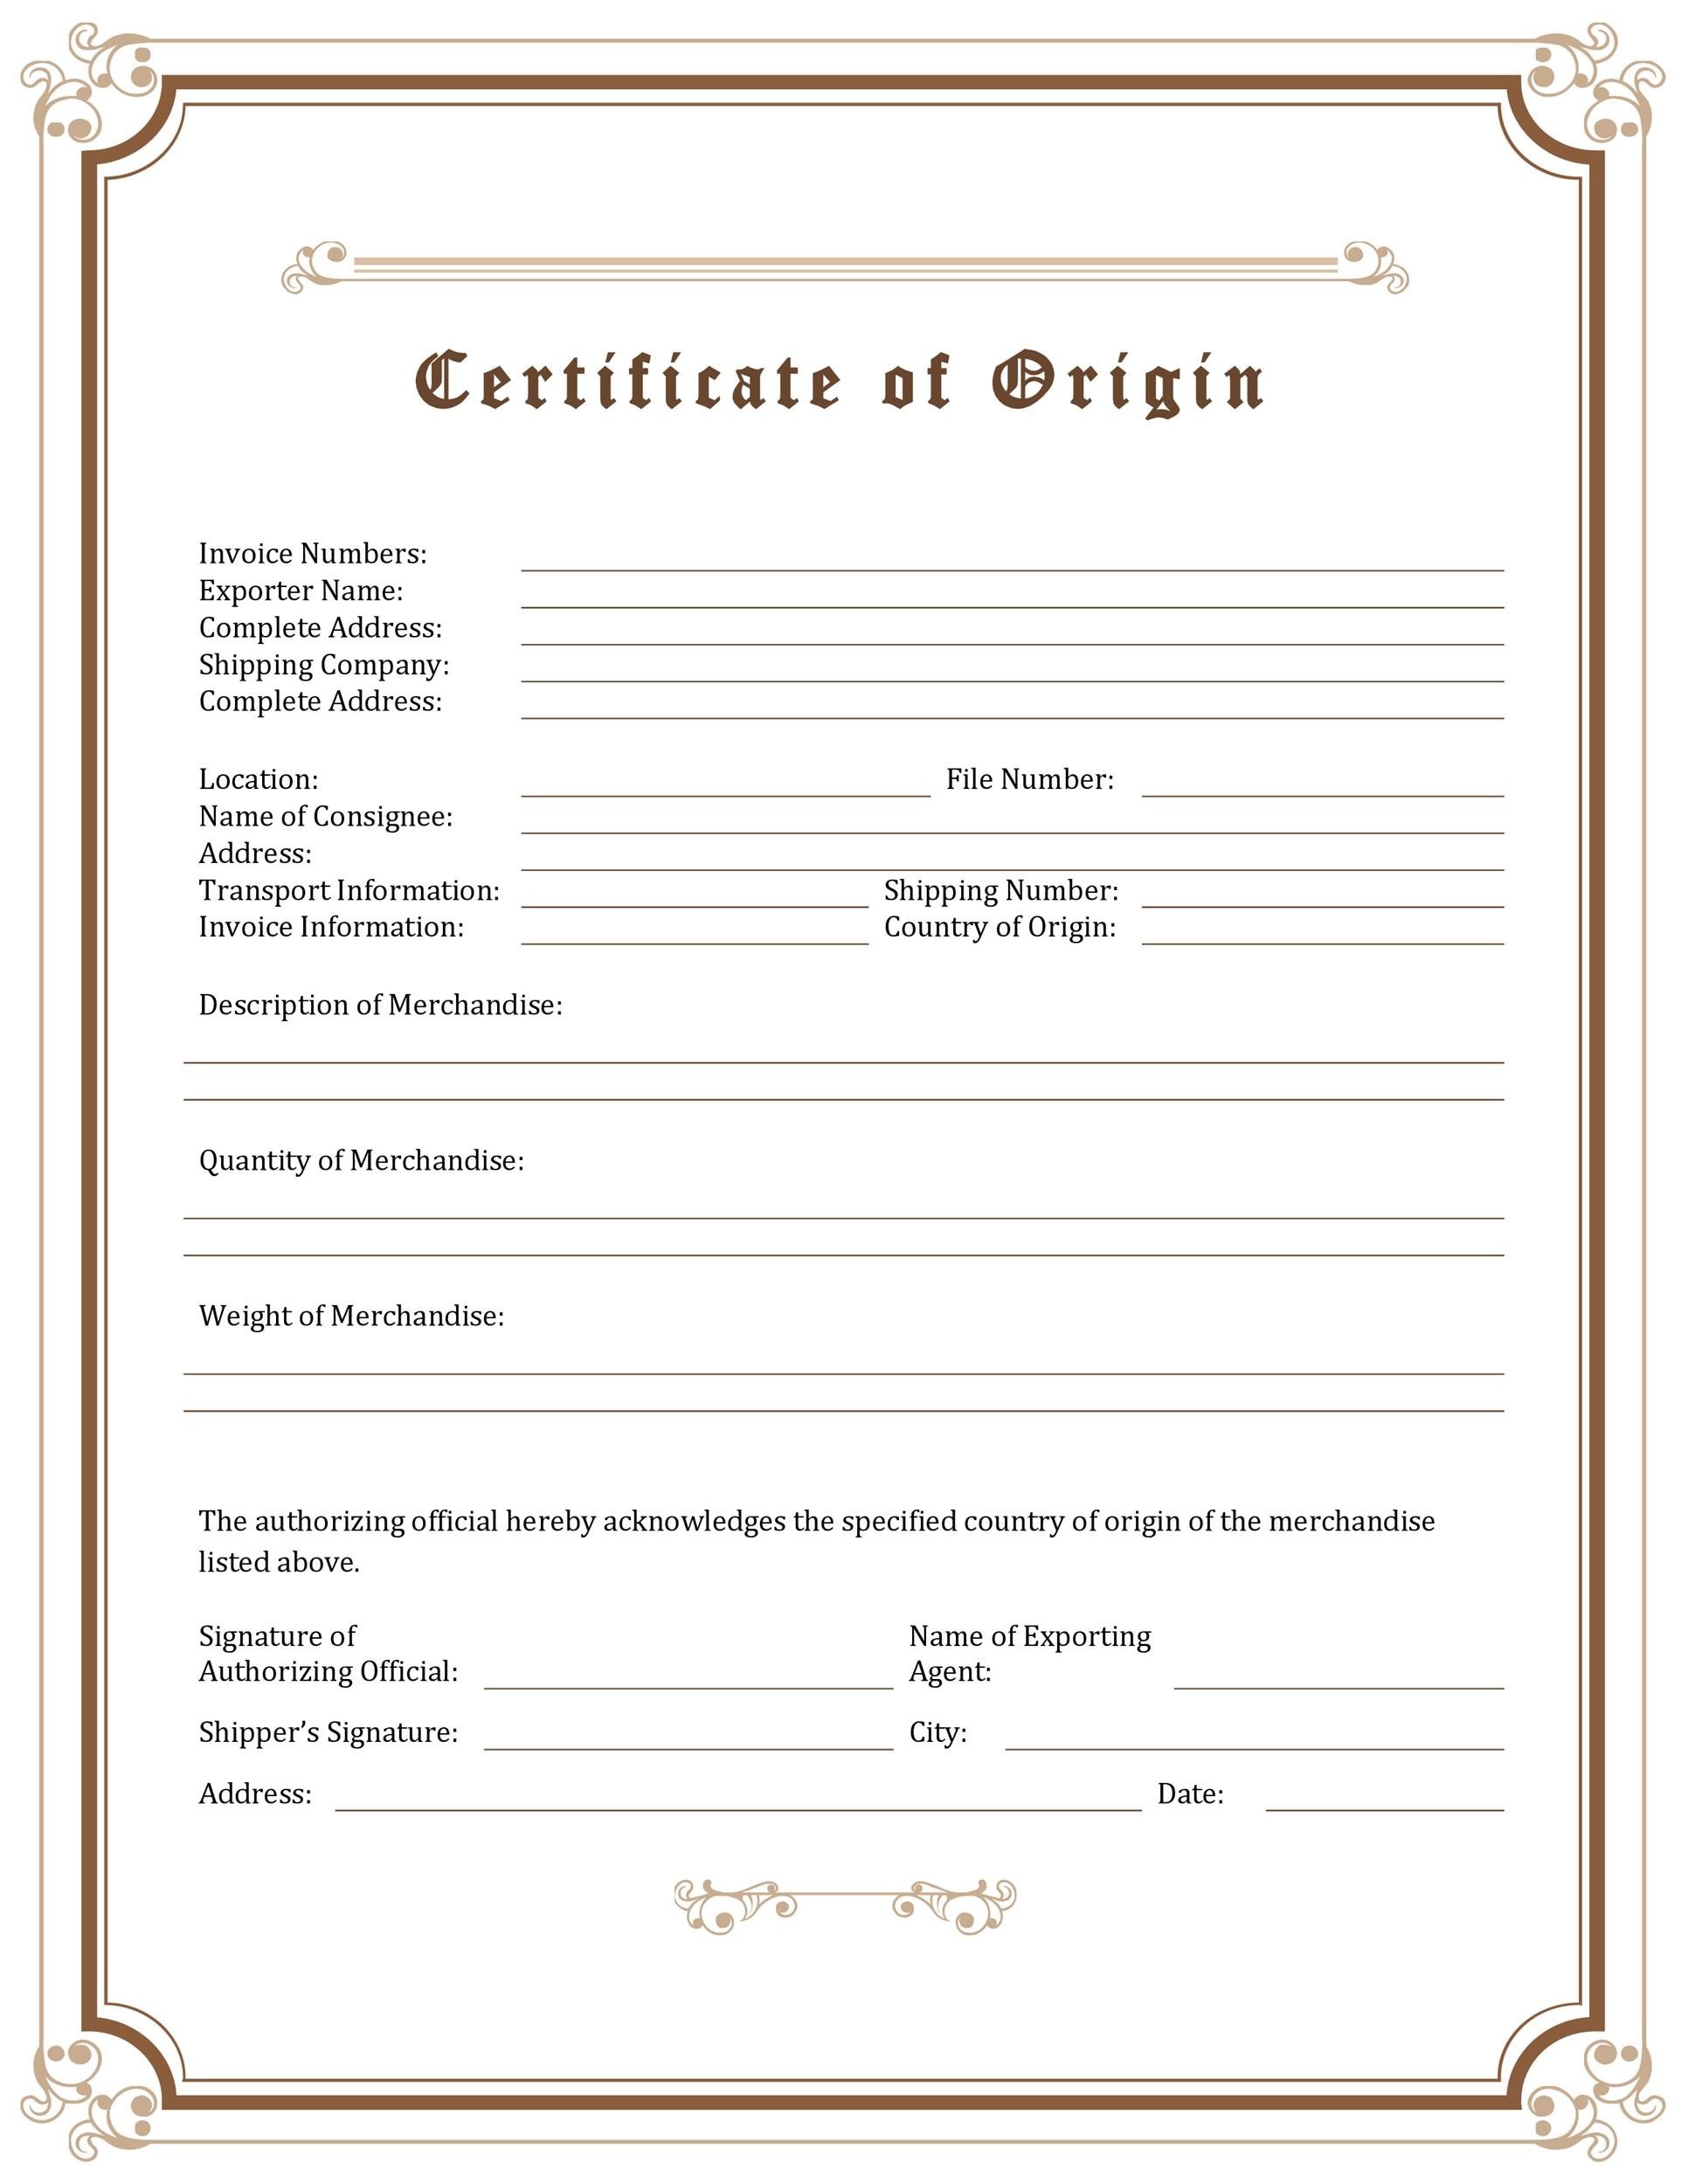 Free certificate of origin 03